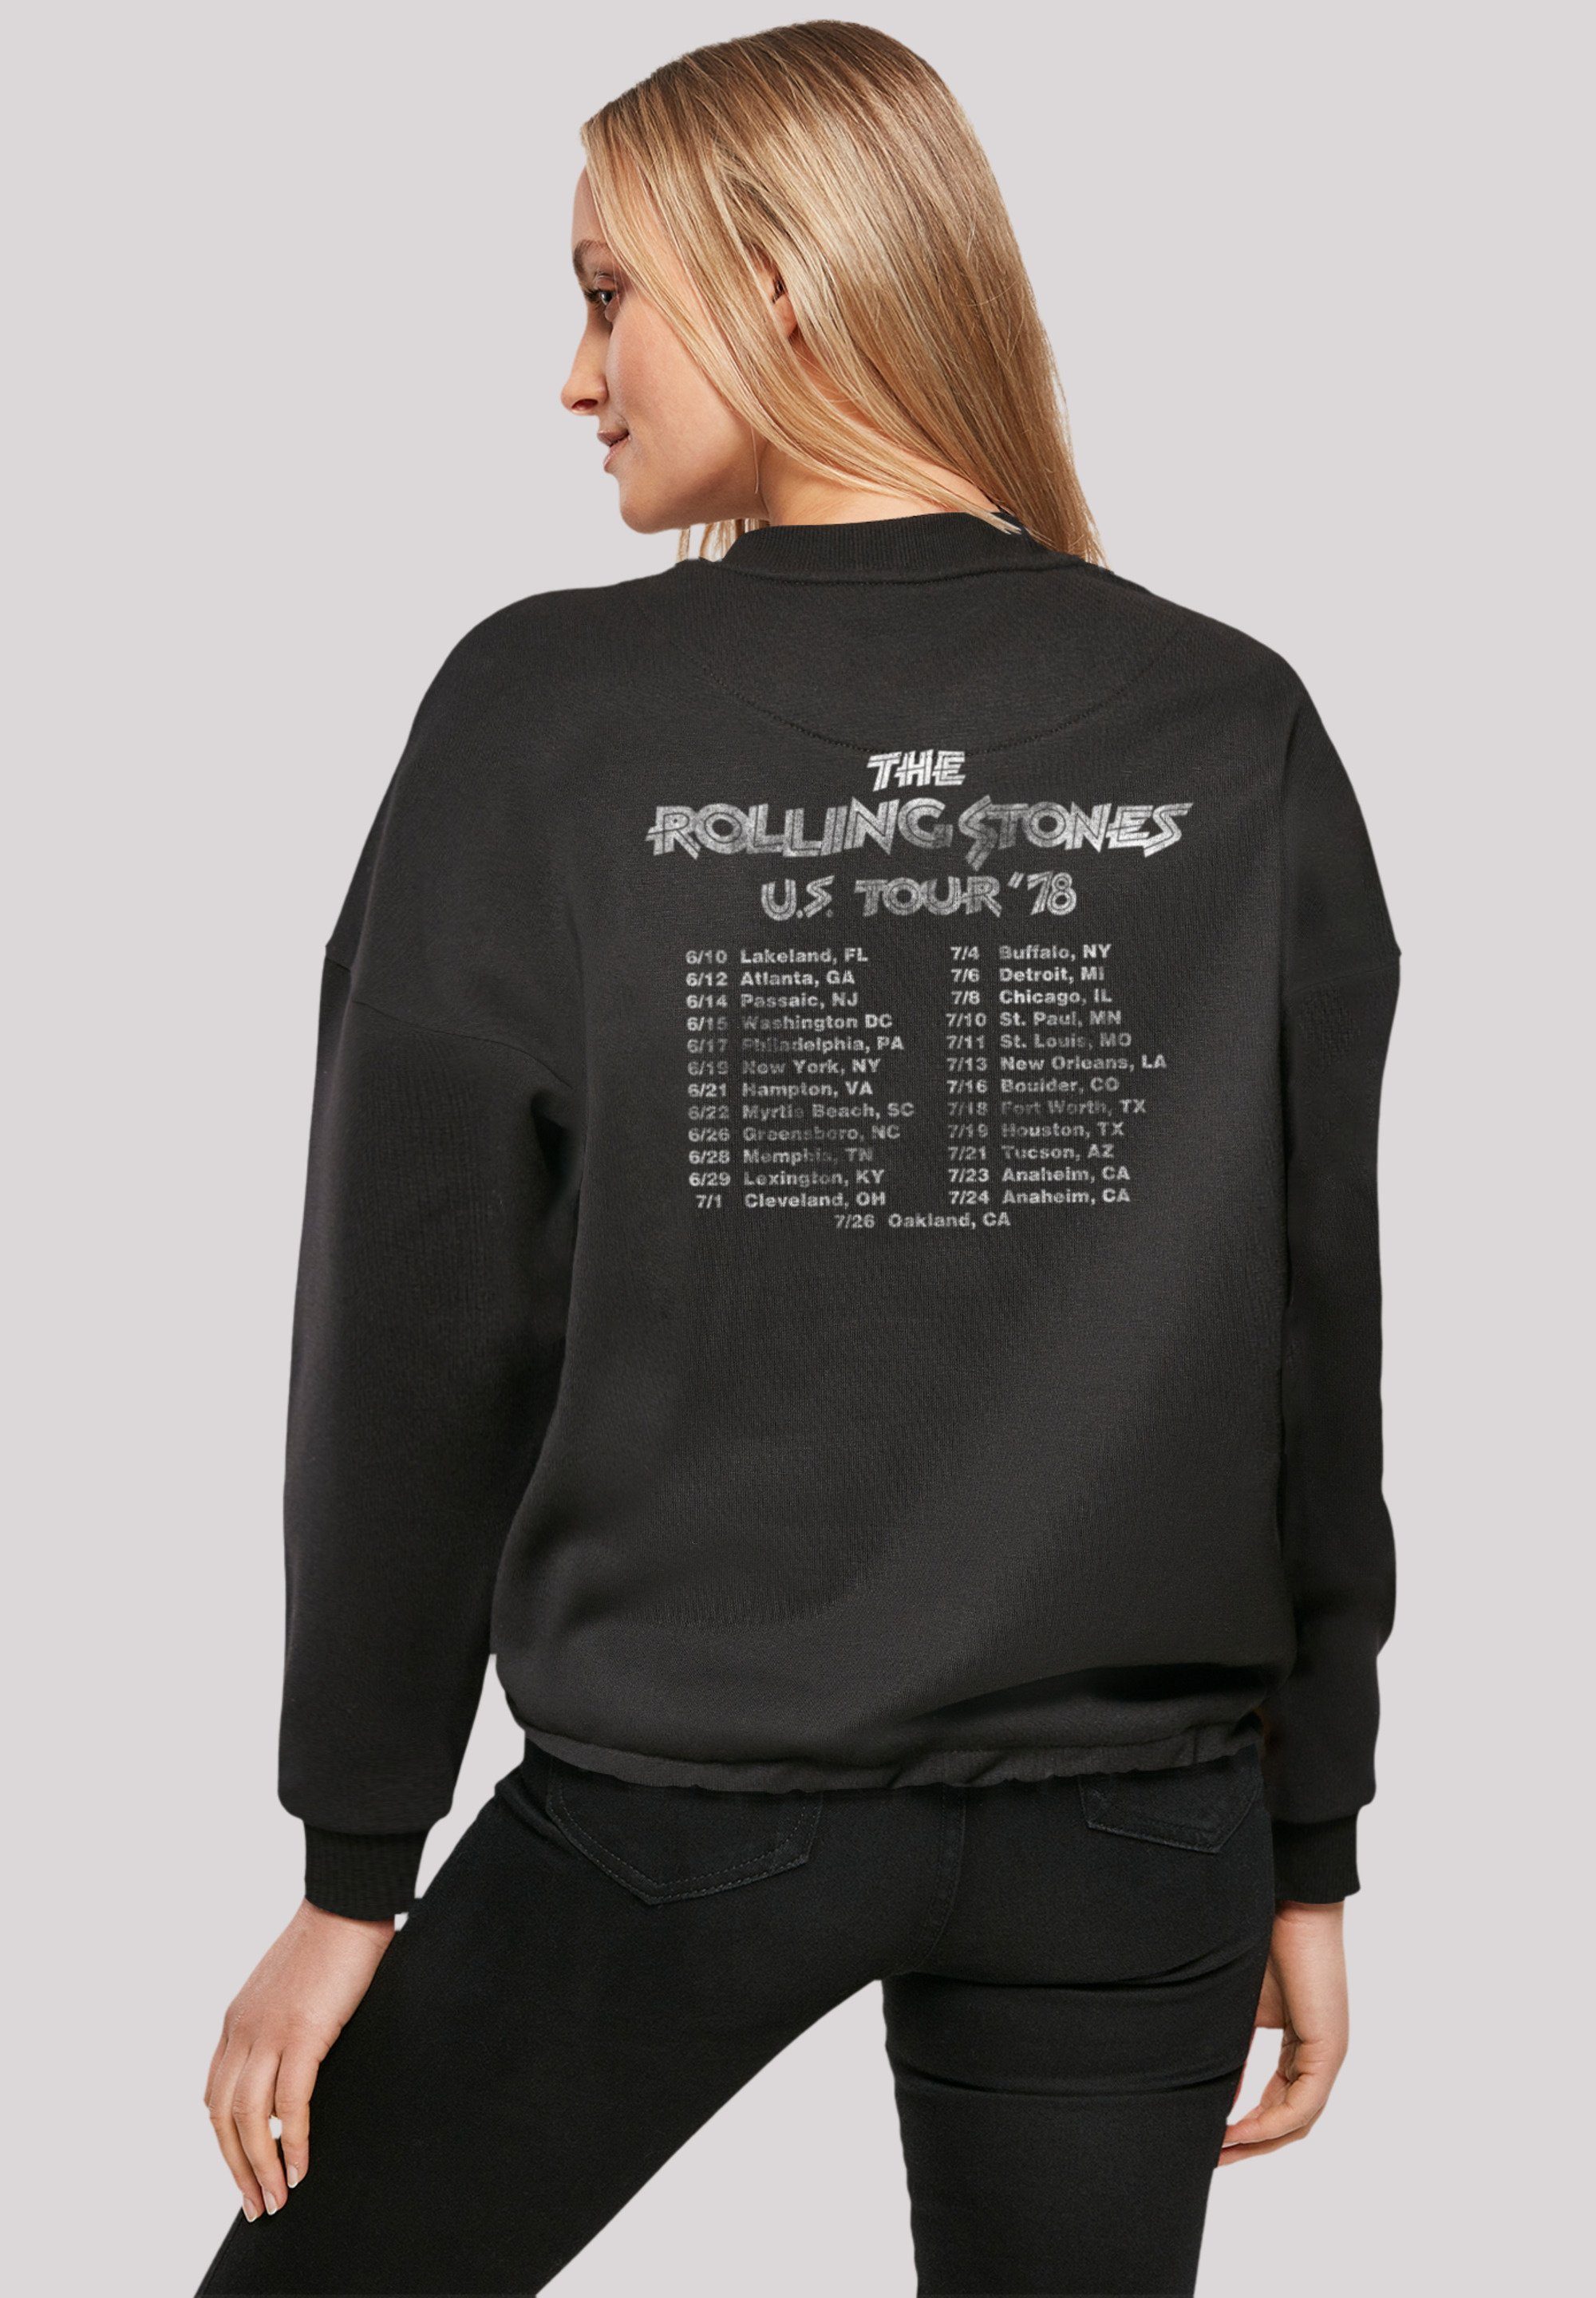 Rolling '78 F4NT4STIC Stones Print Tour Sweatshirt US The